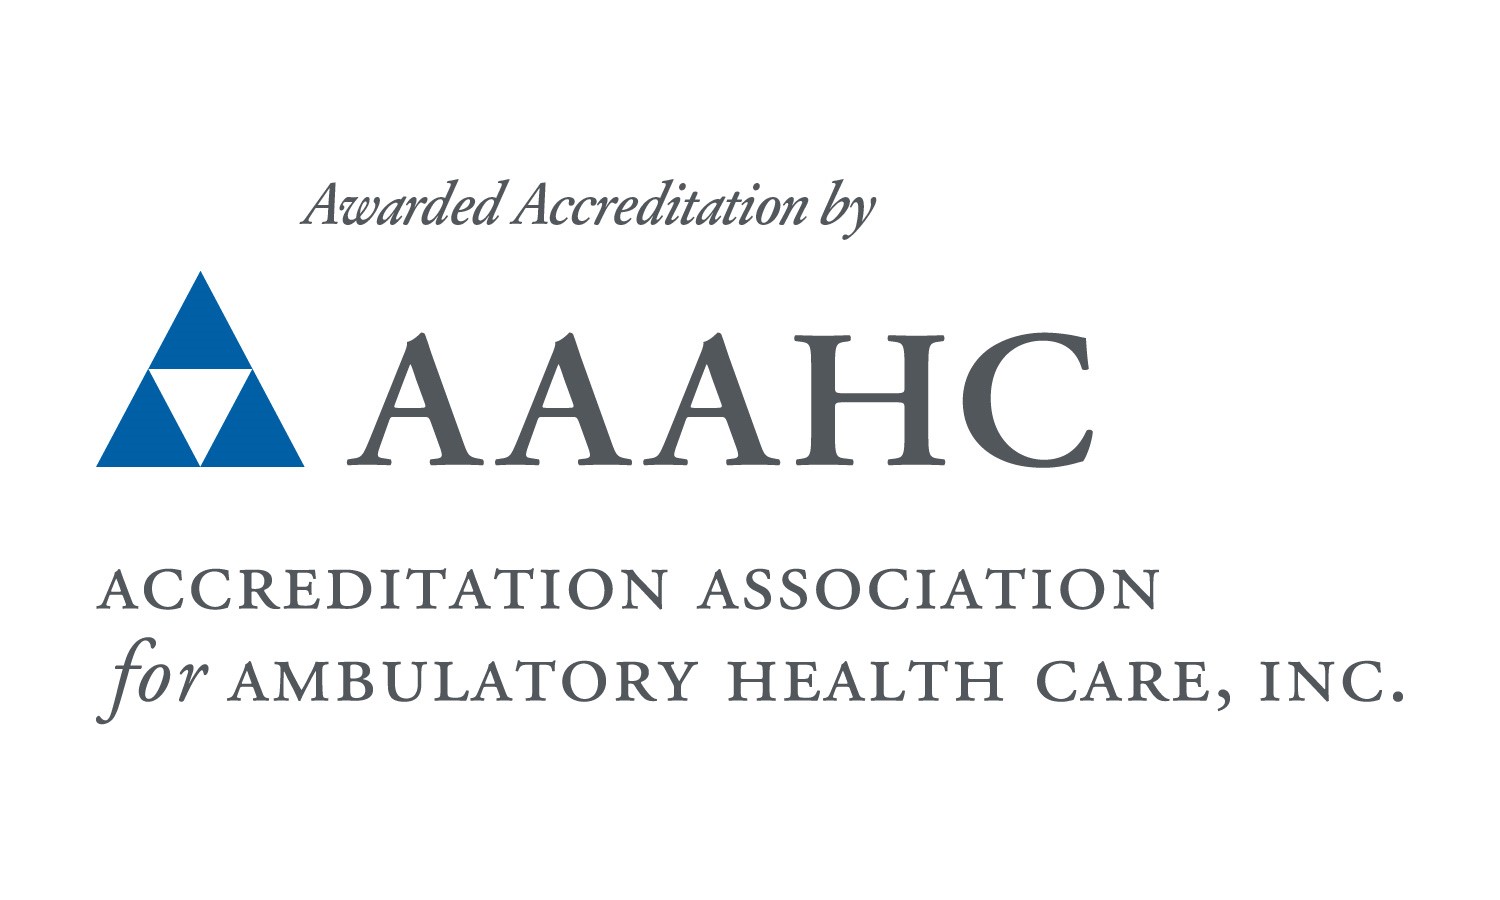 AAAHC Accreditation